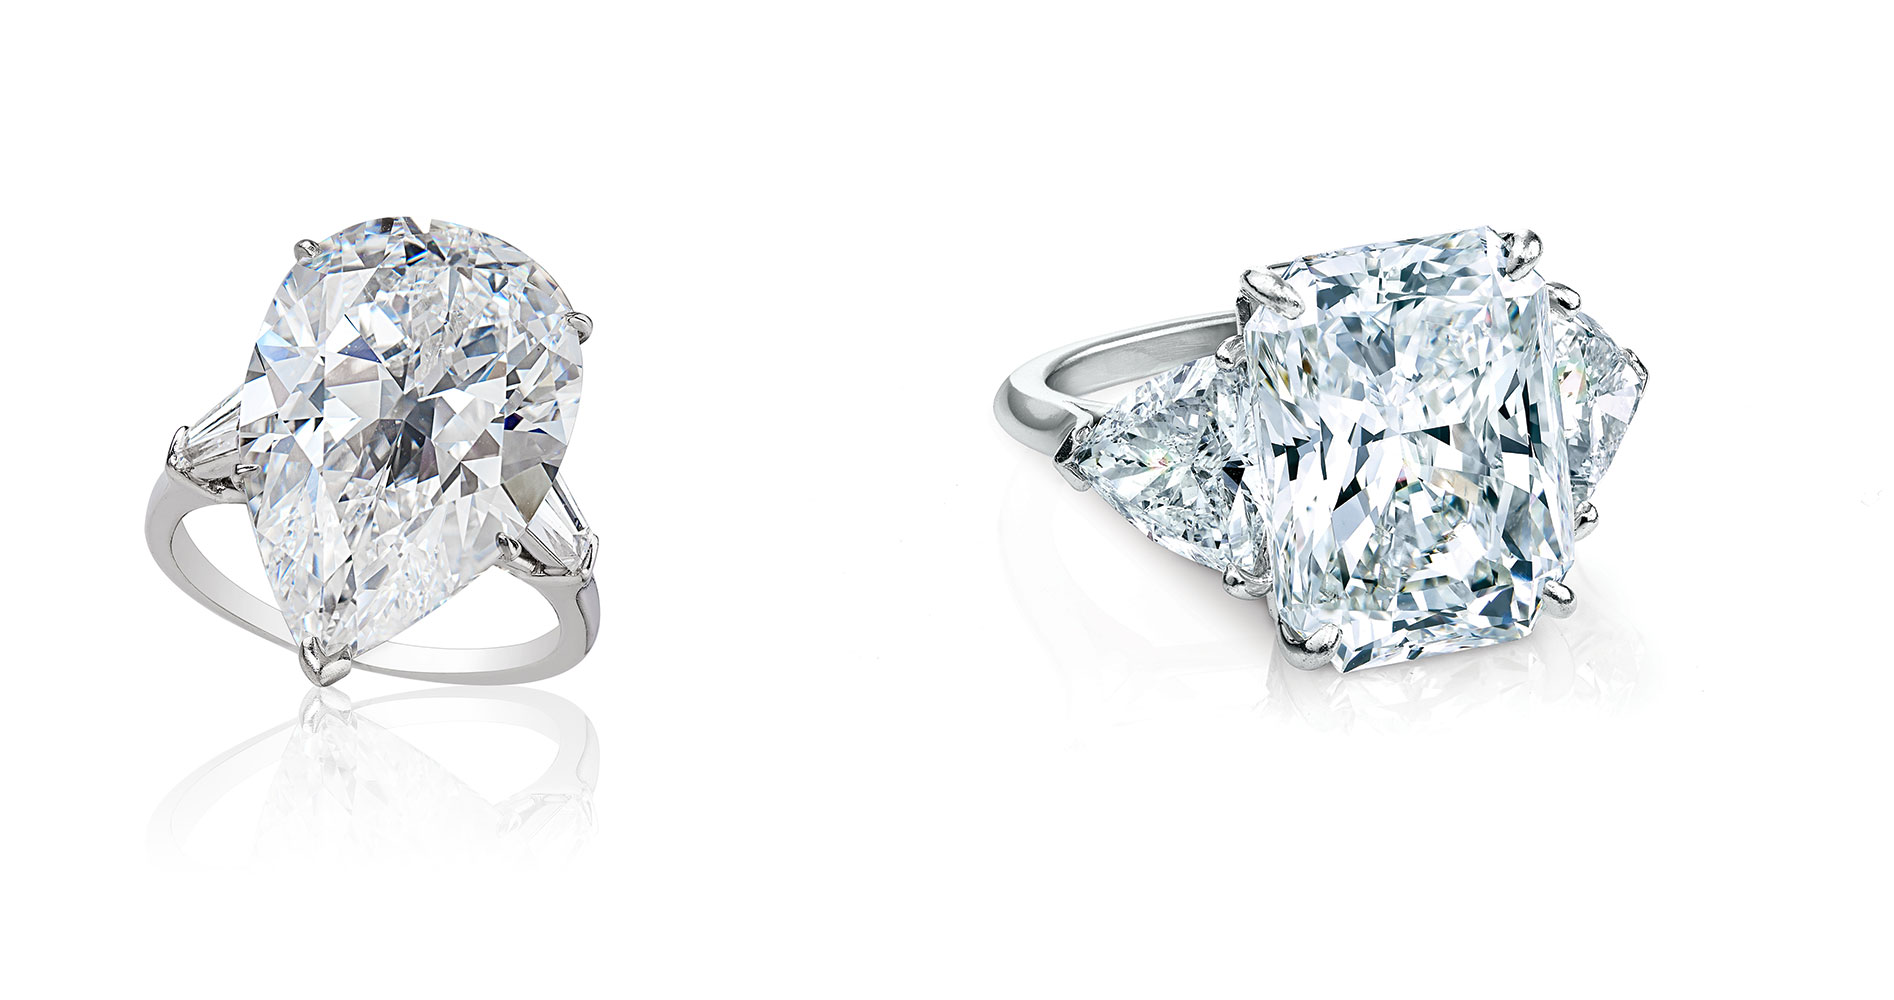 Circa pear shape and radiant cut diamond rings